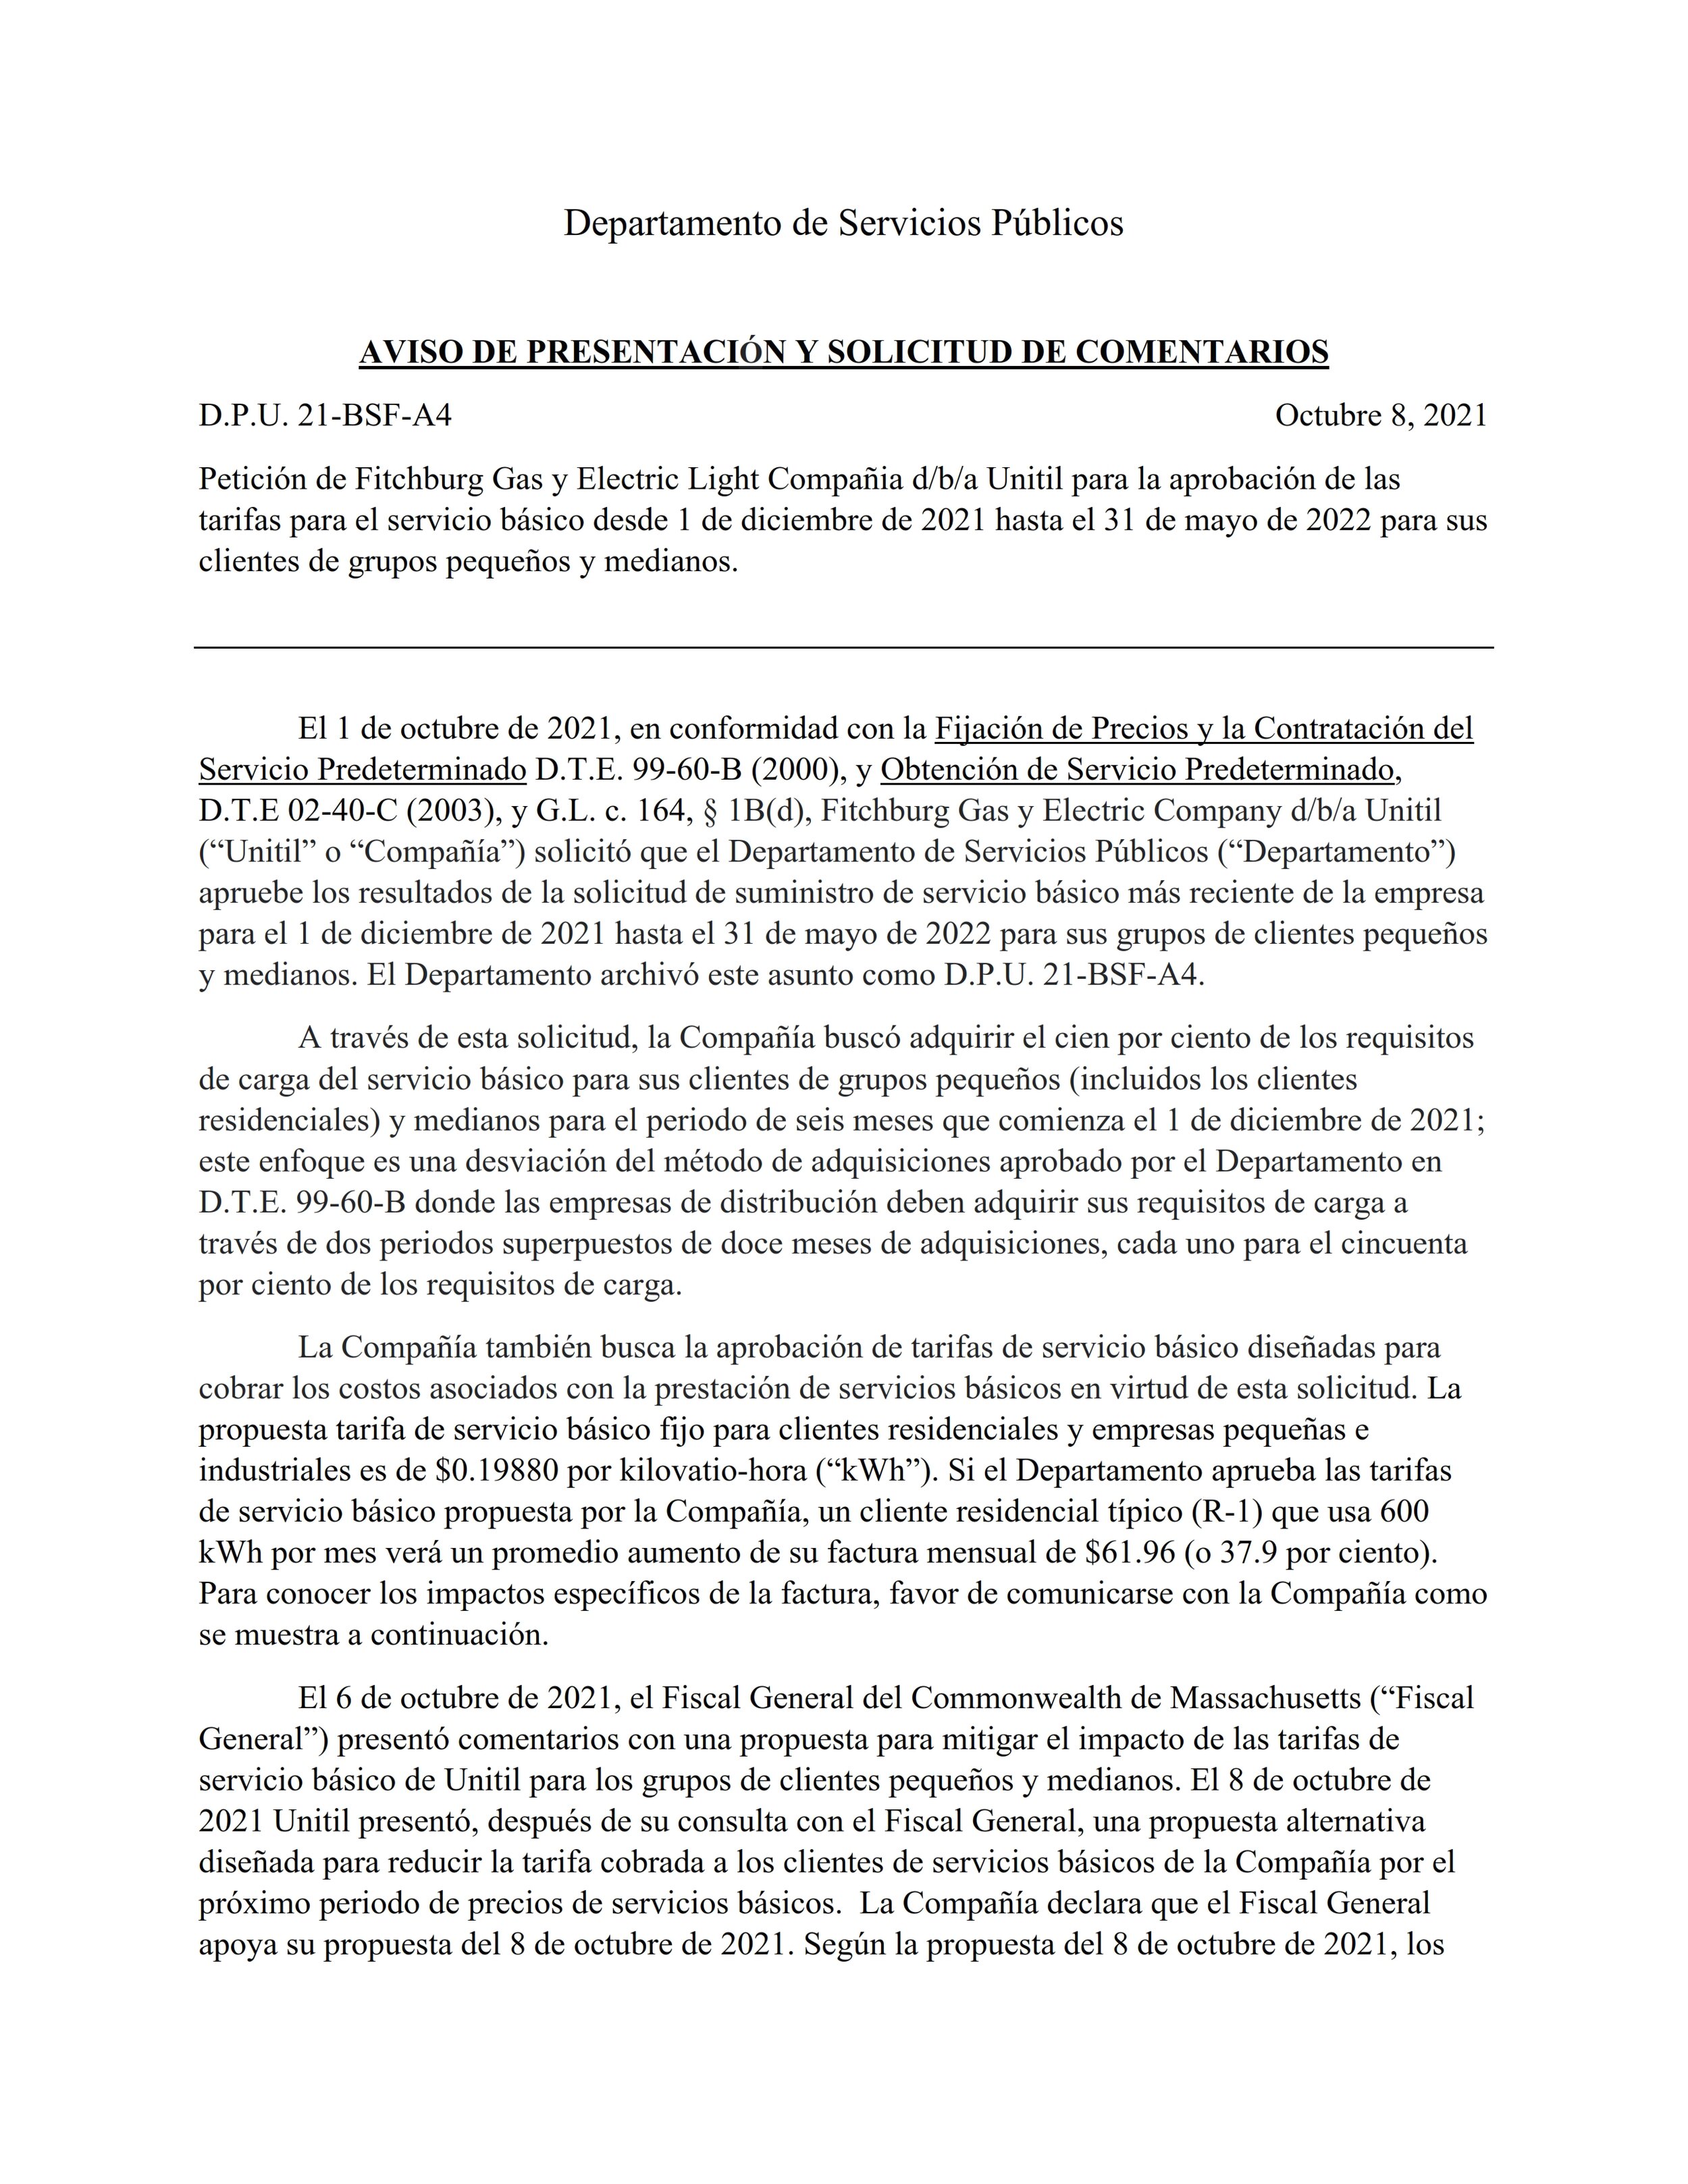 DPU 21-BSF-A4 Notice of Filing_Spanish_001.jpg